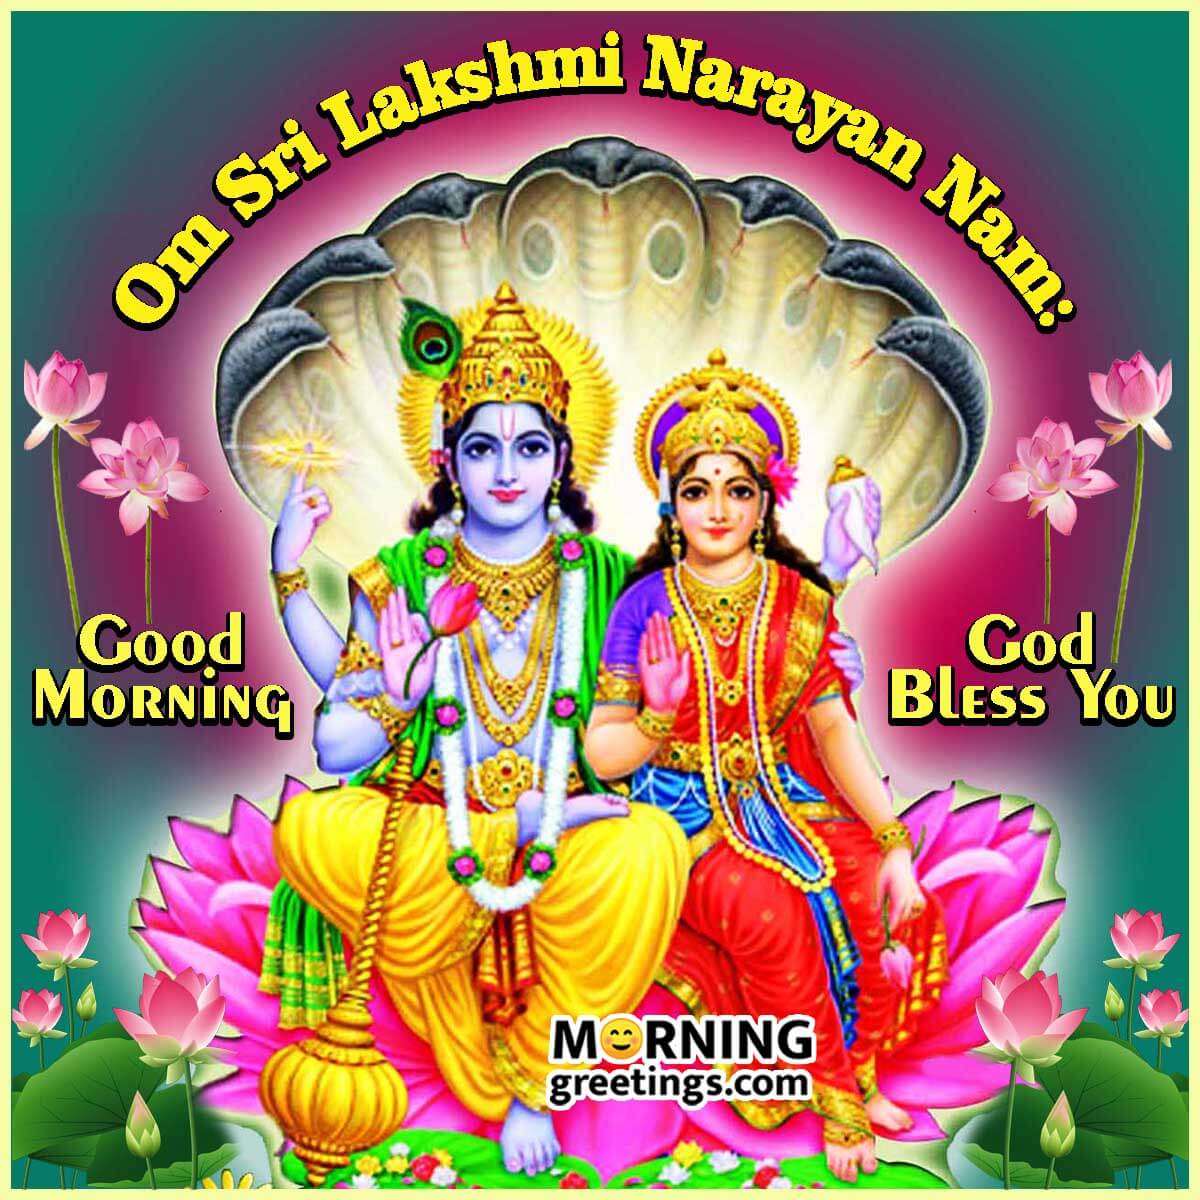 Good Morning Om Sri Lakshmi Narayan Namah Picture